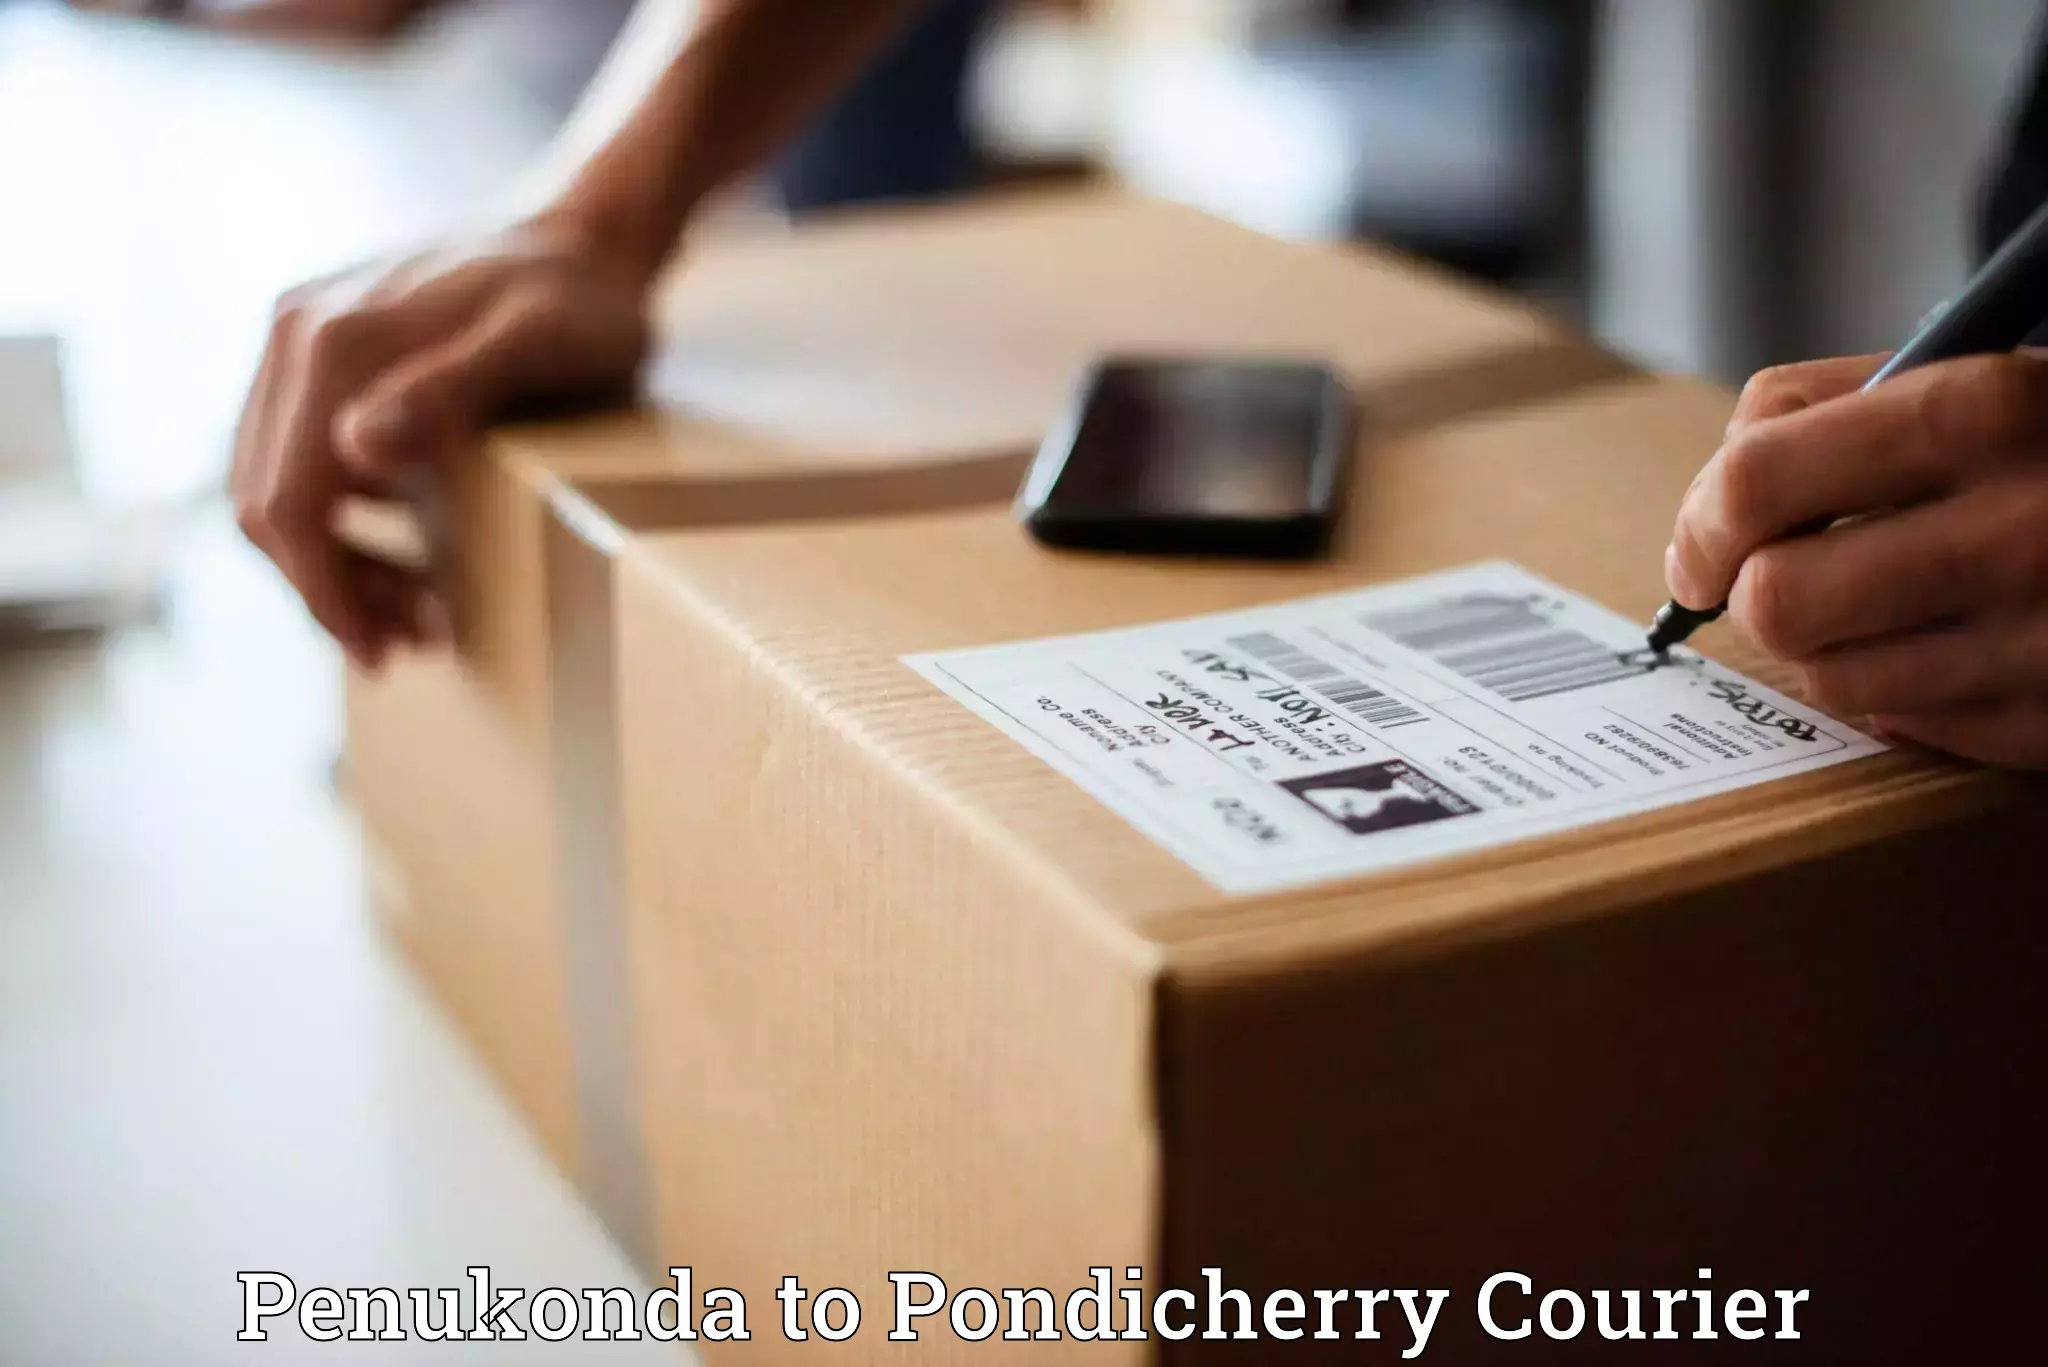 Global logistics network Penukonda to Pondicherry